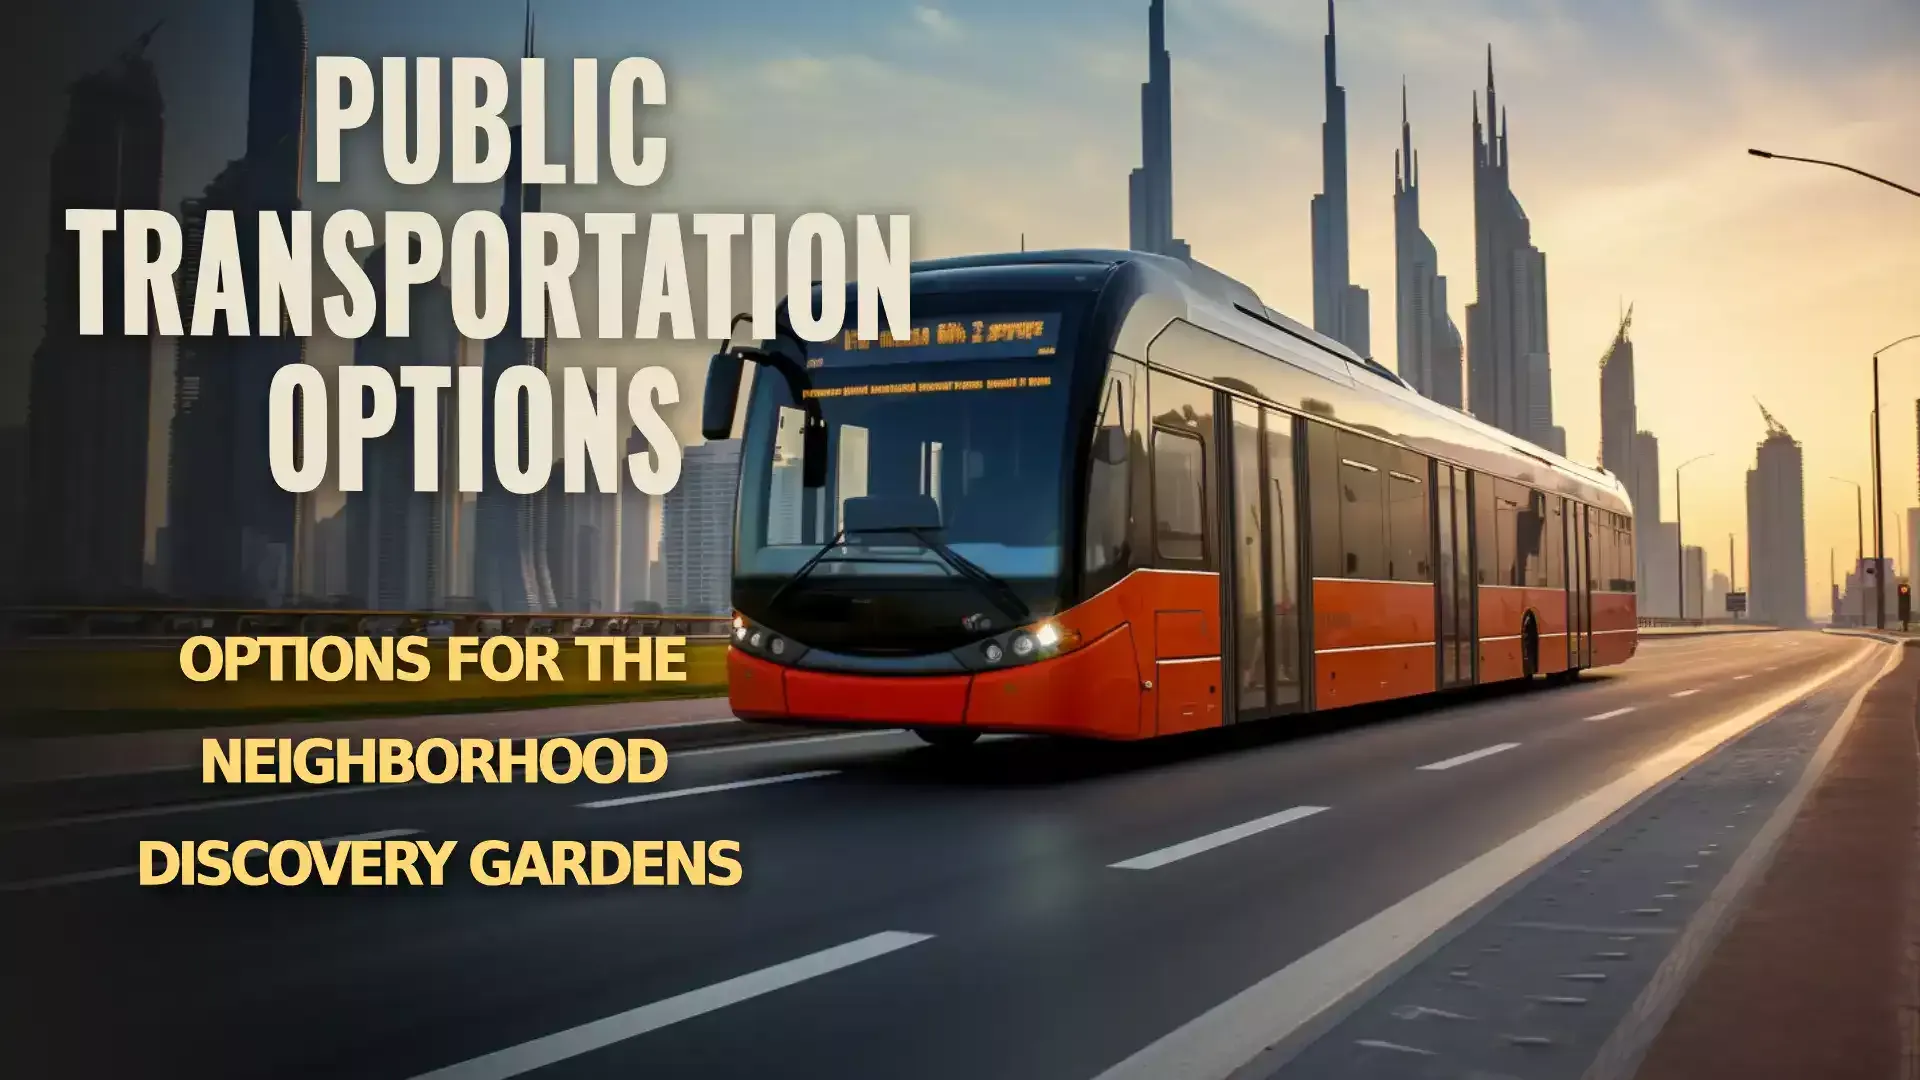 Effortless Commutes Await - Public Transportation in Discovery Gardens